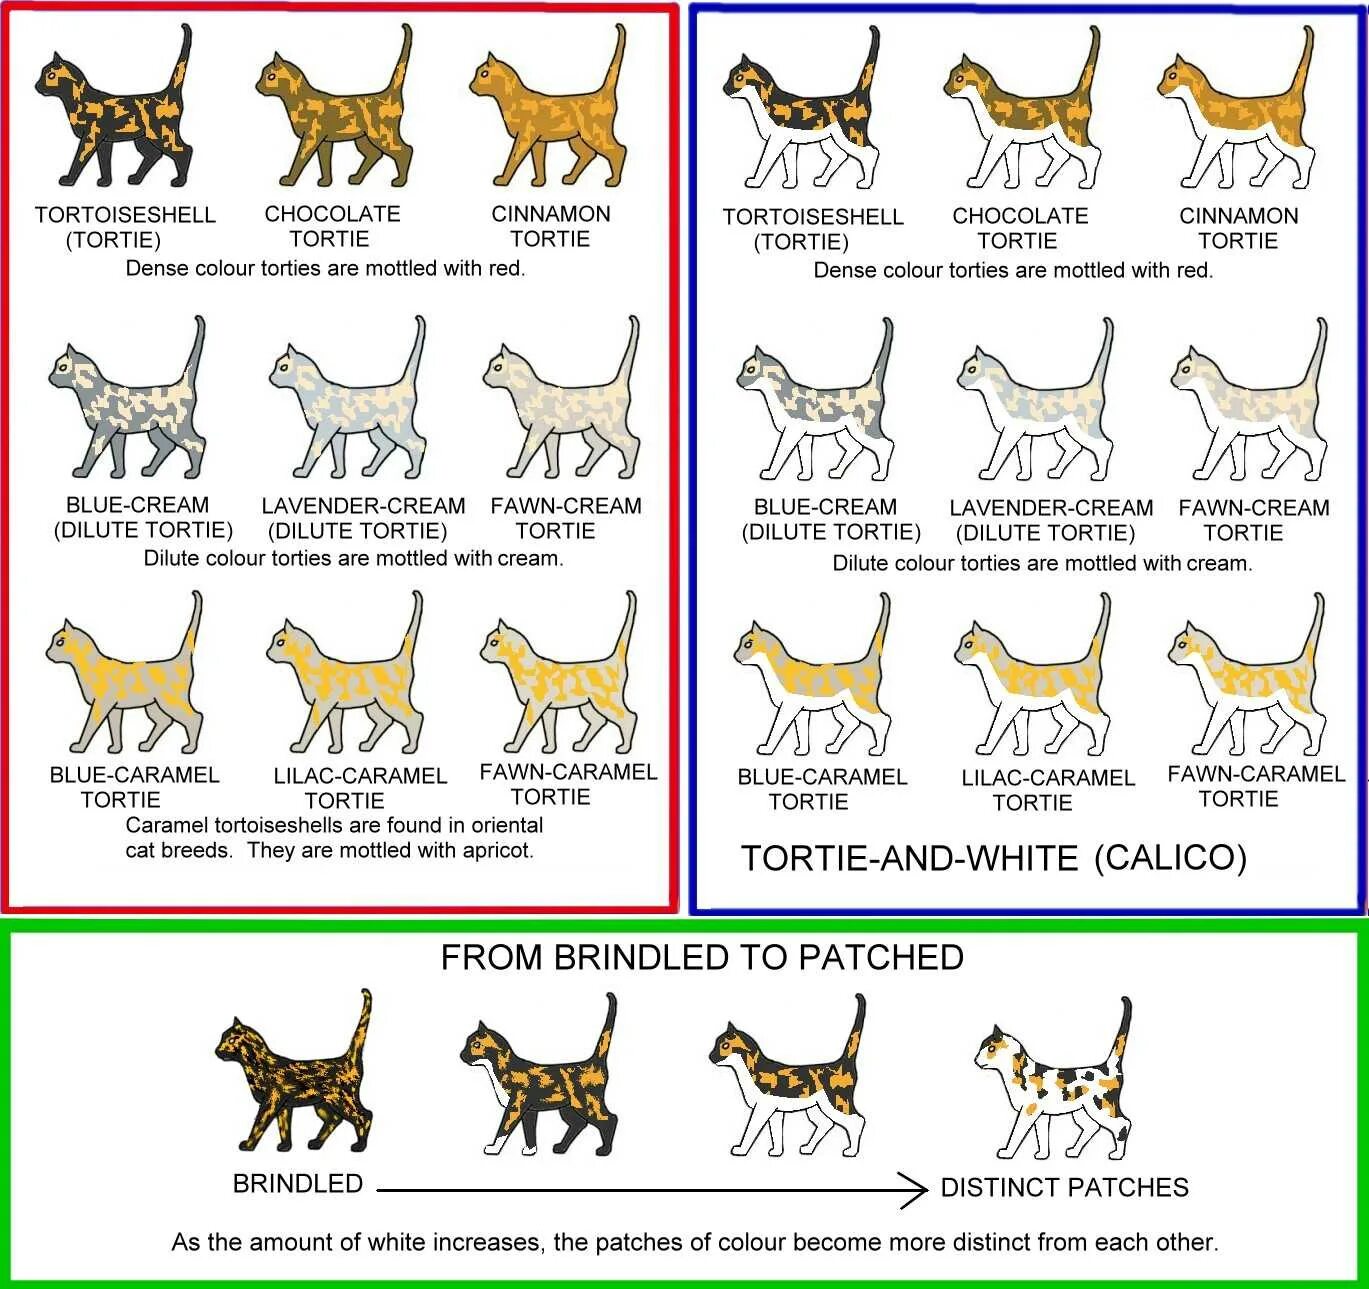 Окрас у кошек табби таблица окрасов. Окрасы британских кошек таблица обозначений. Окрас шерсти кошек классификация. Окрасы шотландских кошек таблица. Типы окрасов кошек